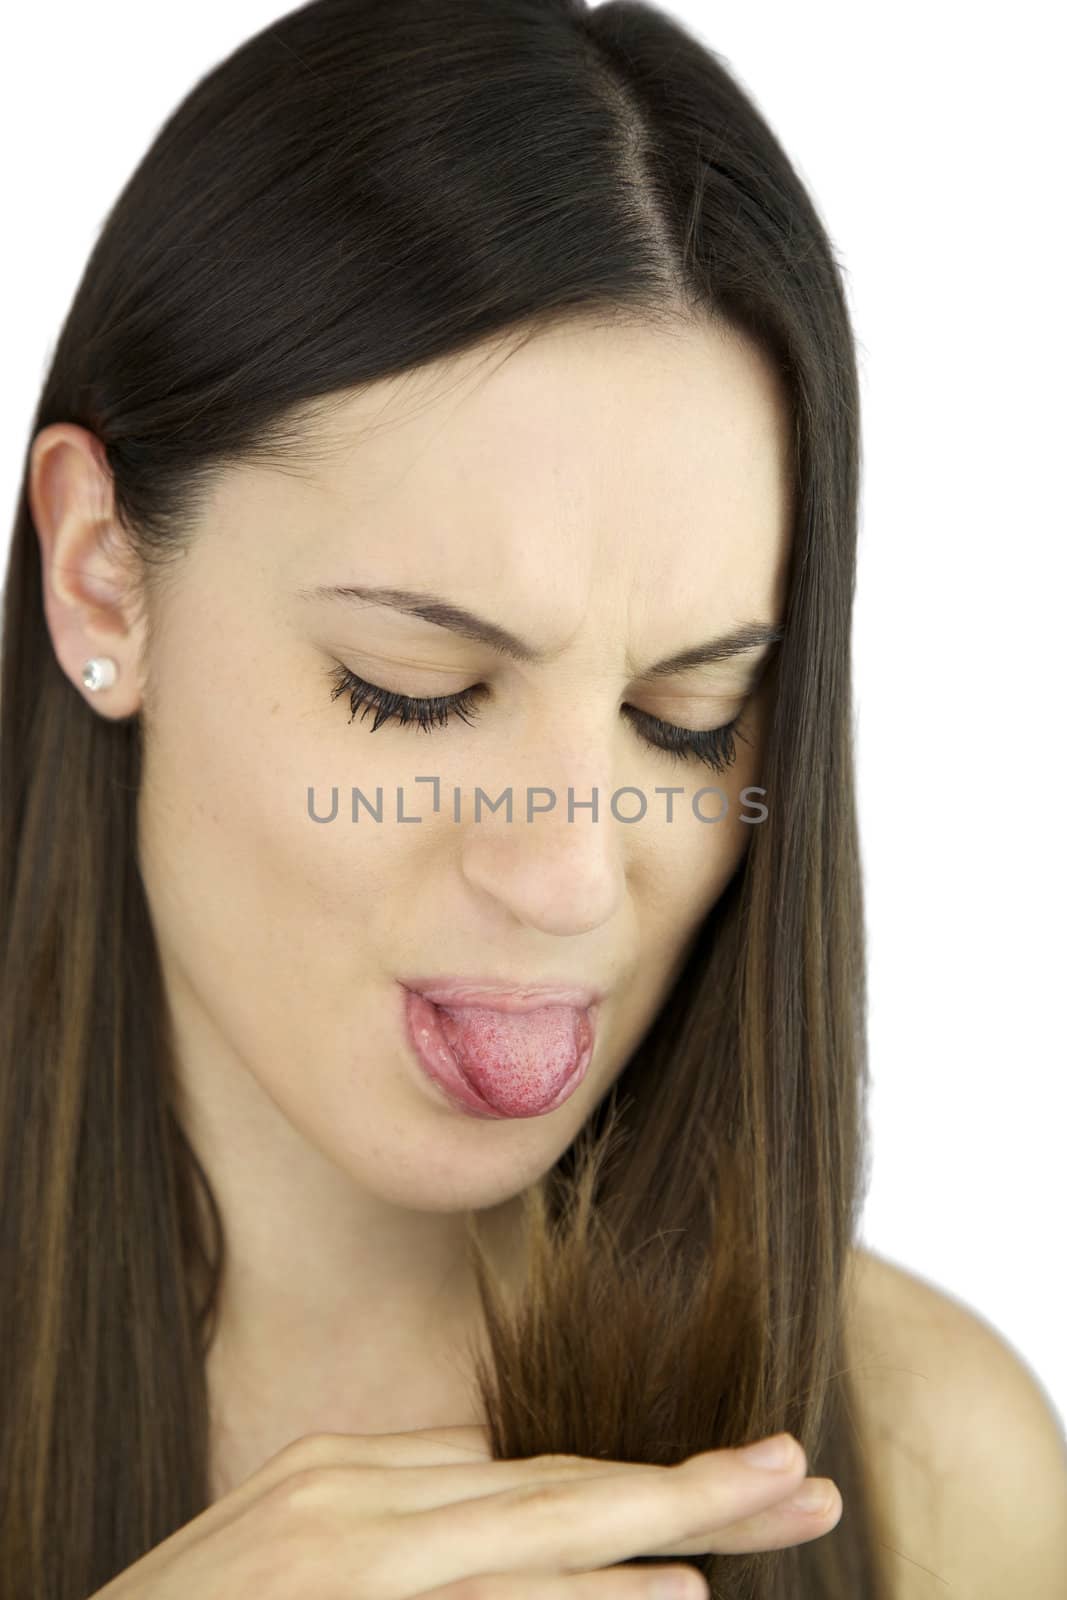 Angry girl making tongue to ruined hair by fmarsicano